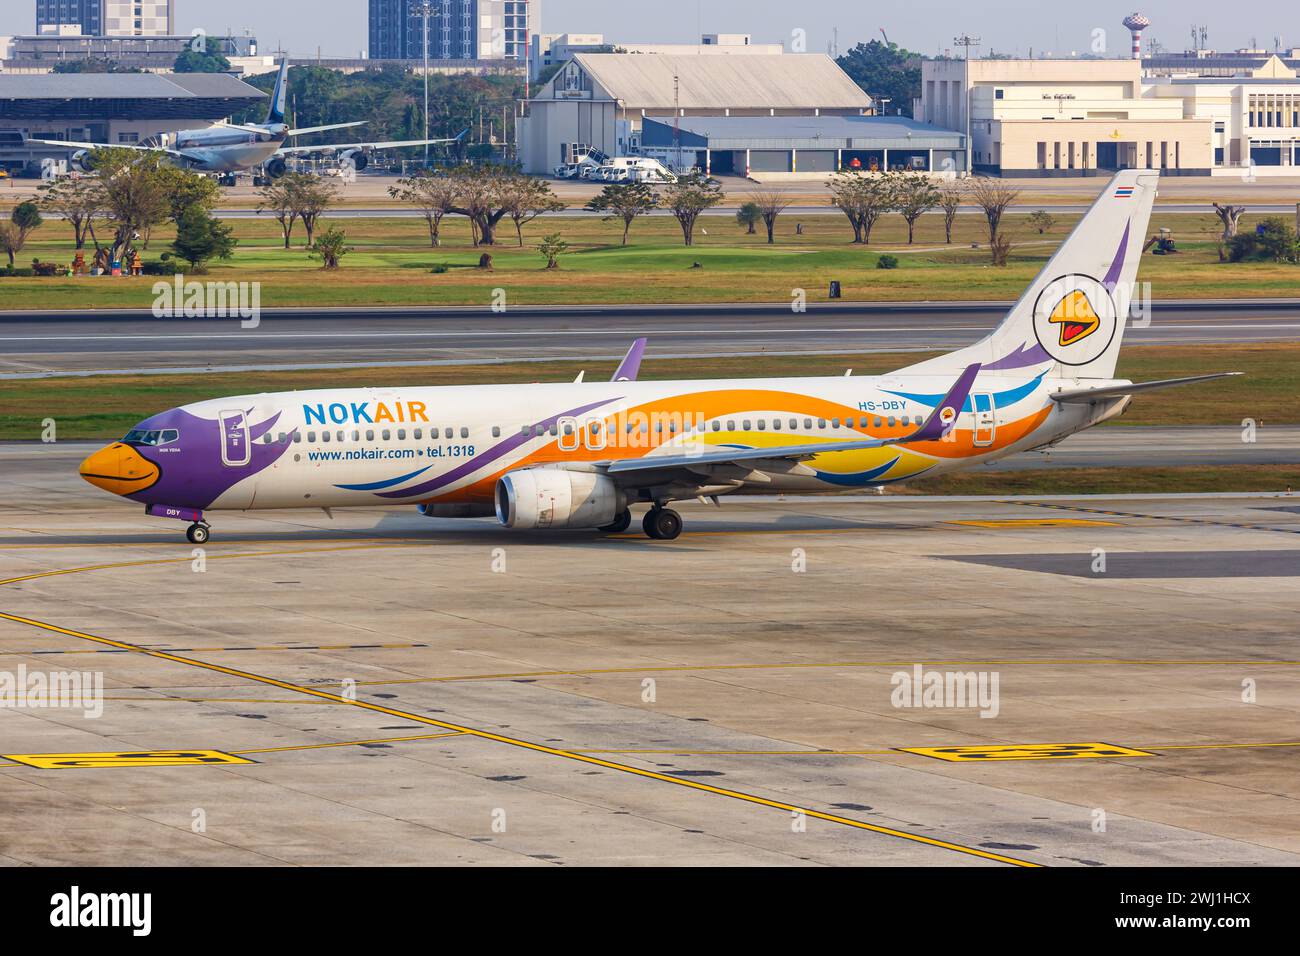 NokAir Boeing 737-800 aircraft Bangkok Don Mueang Airport in Thailand Stock Photo